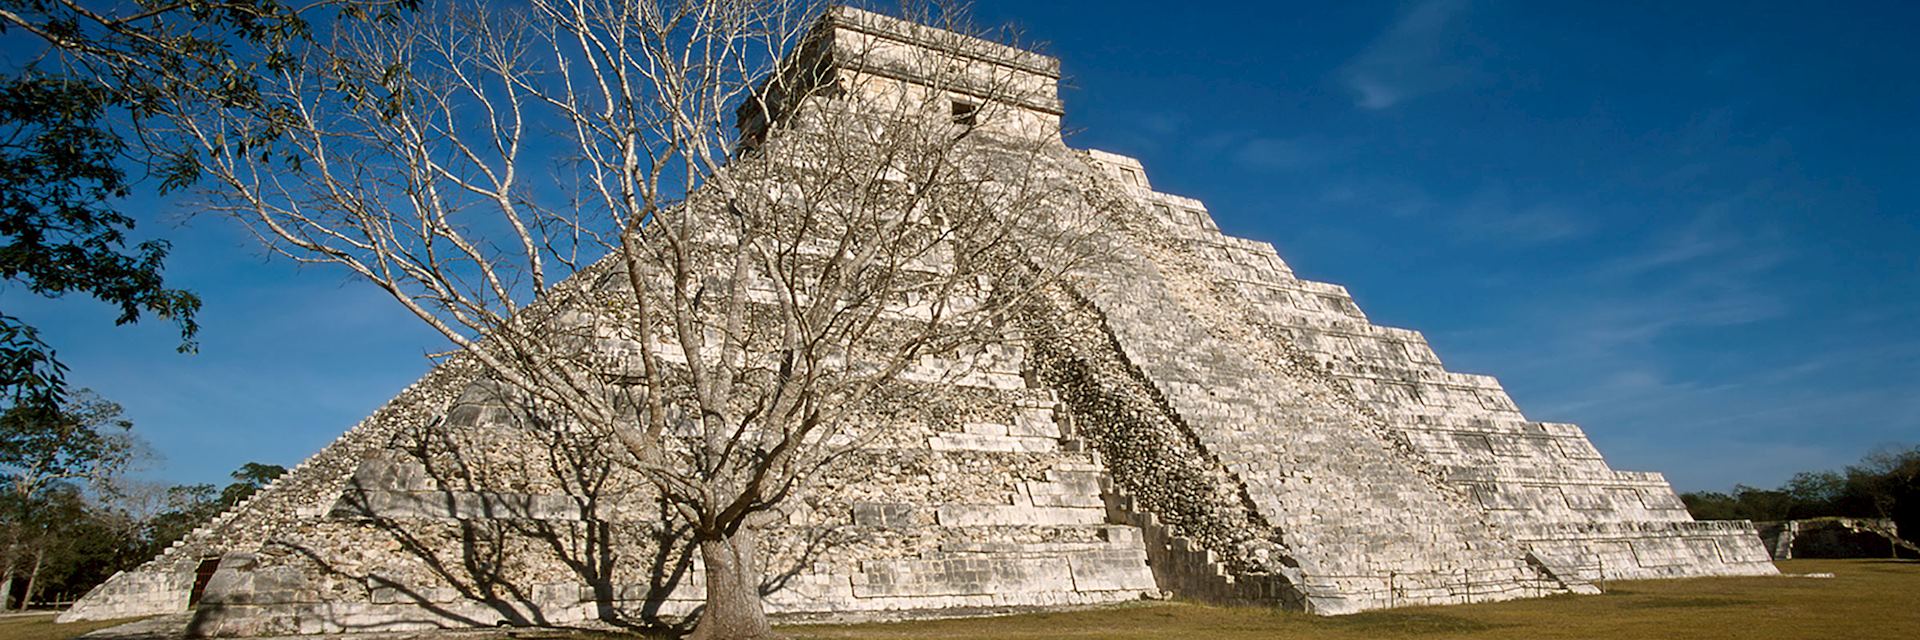 The Maya ruins of Chichén Itzá, Mexico